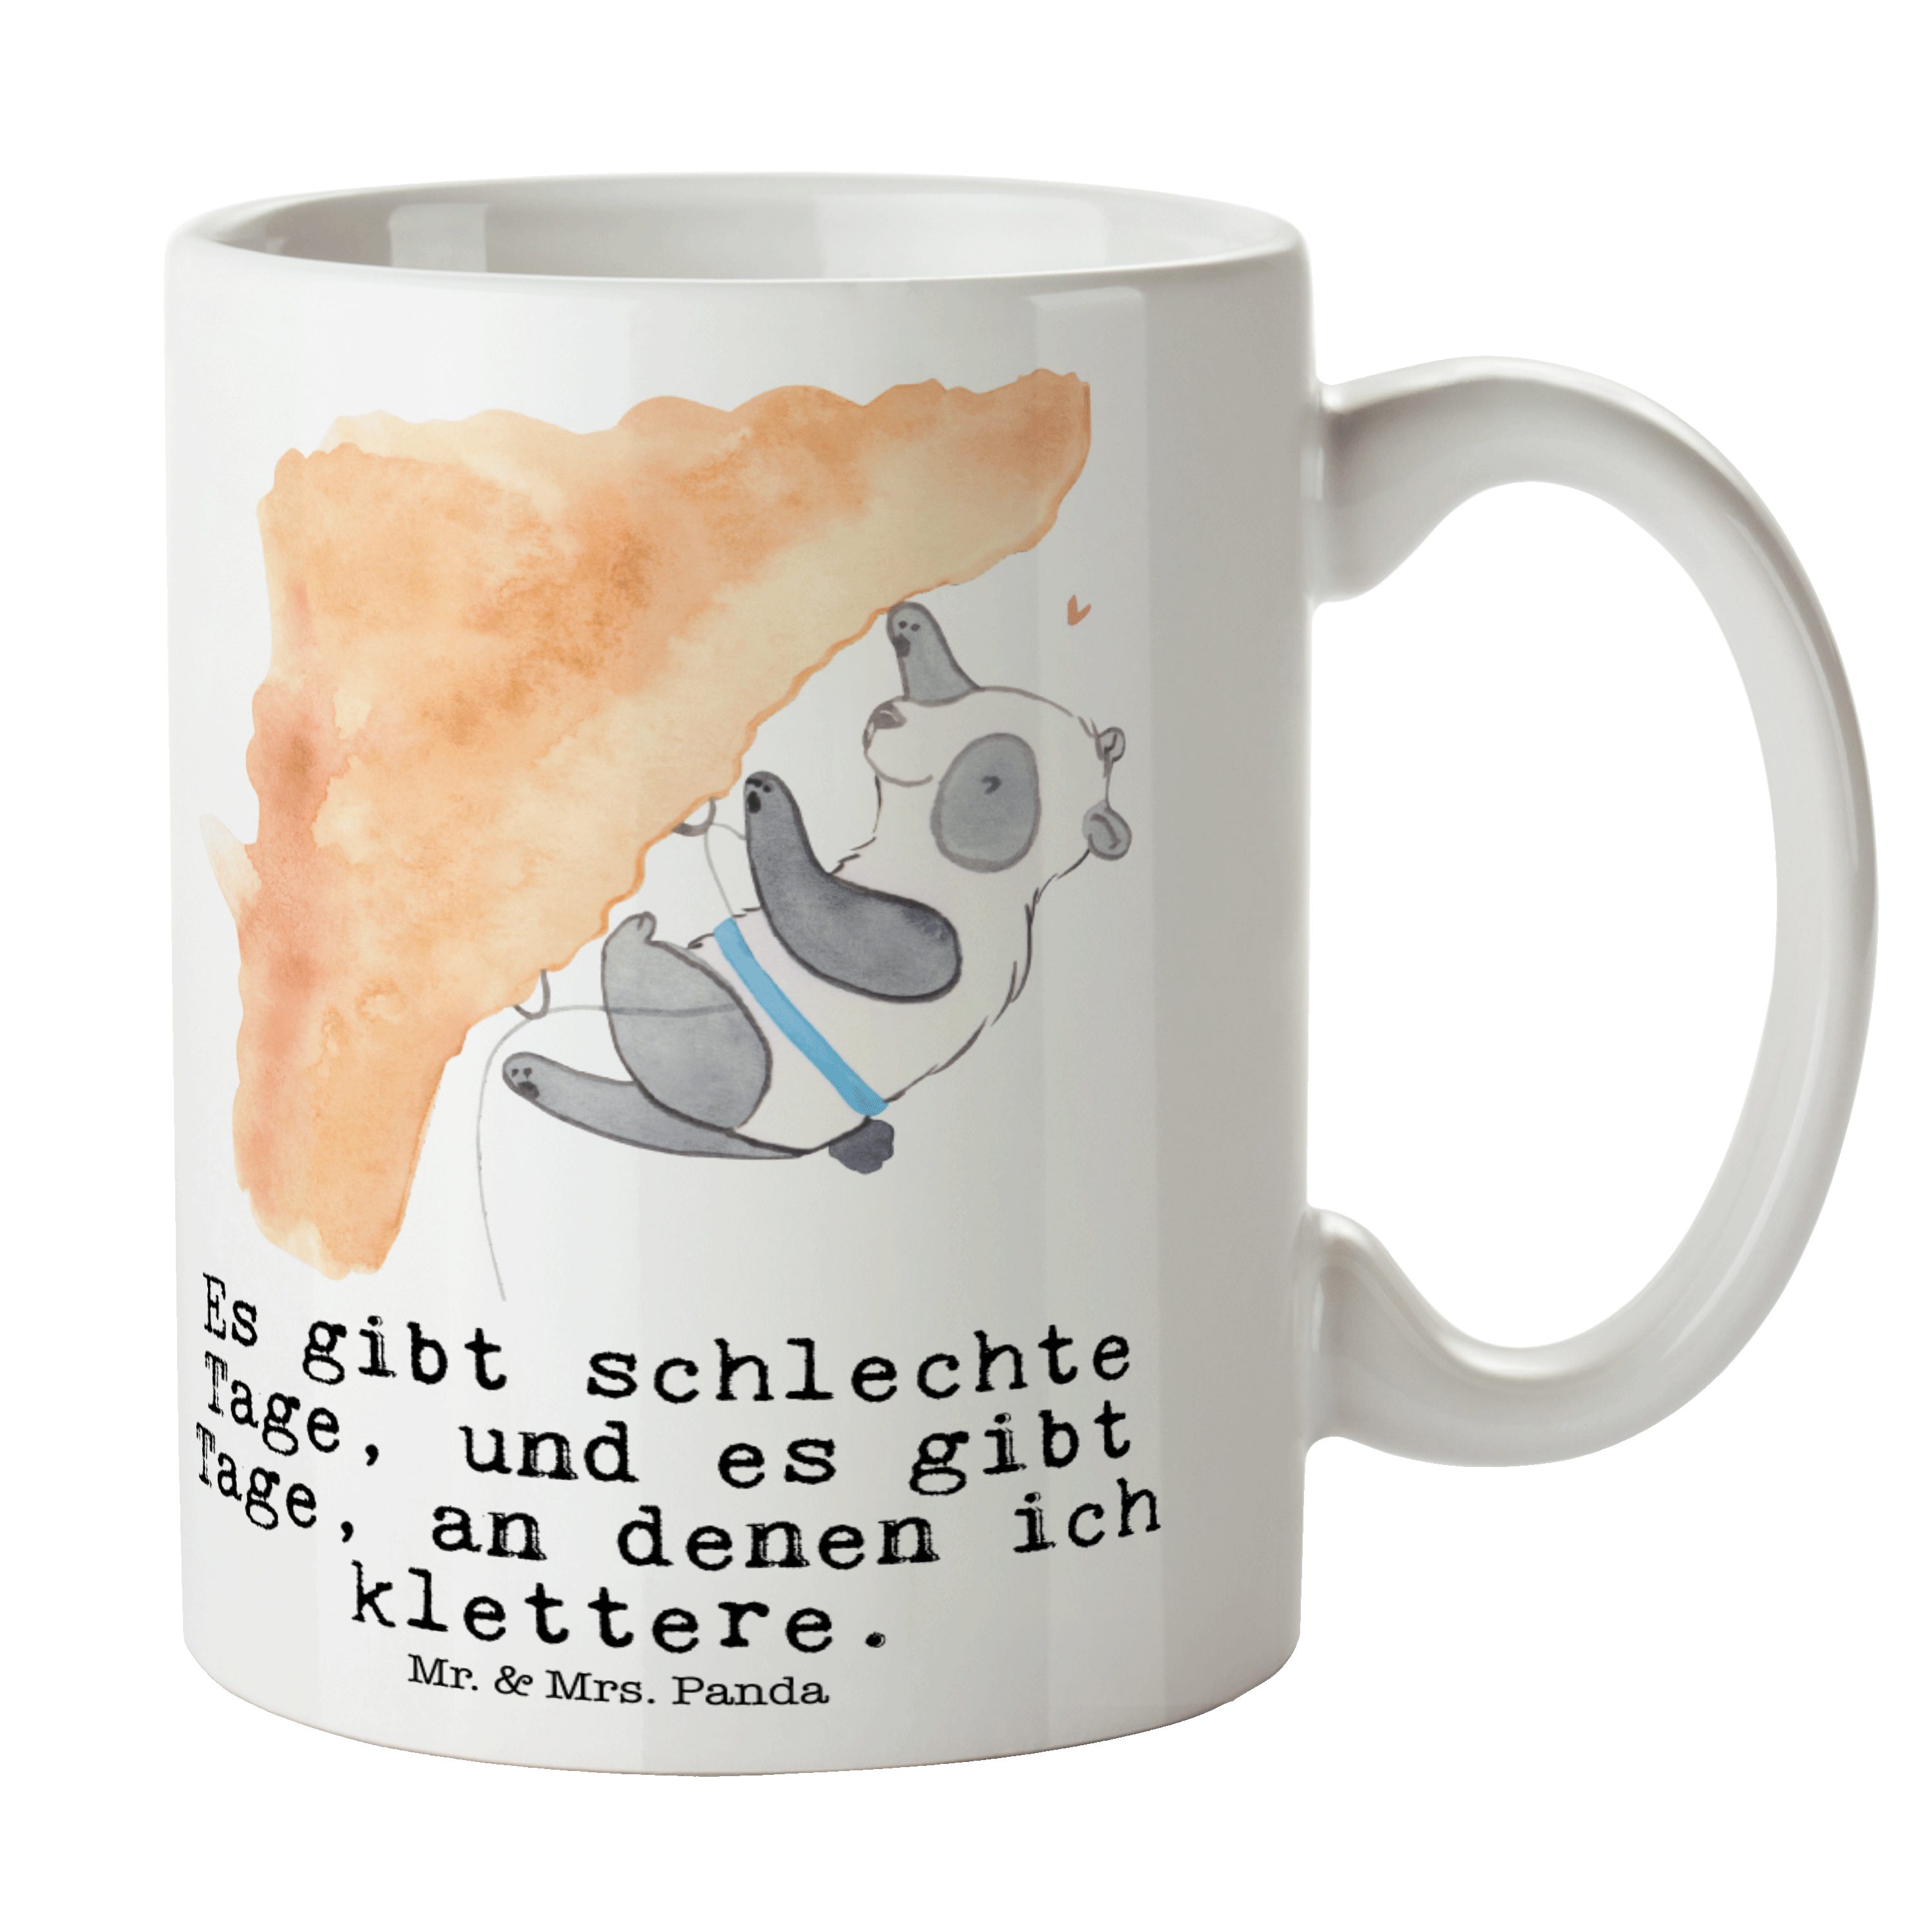 Mr. & Mrs. Panda Tasse Panda Klettern Tage - Weiß - Geschenk, Porzellantasse, Becher, Kaffee, Keramik